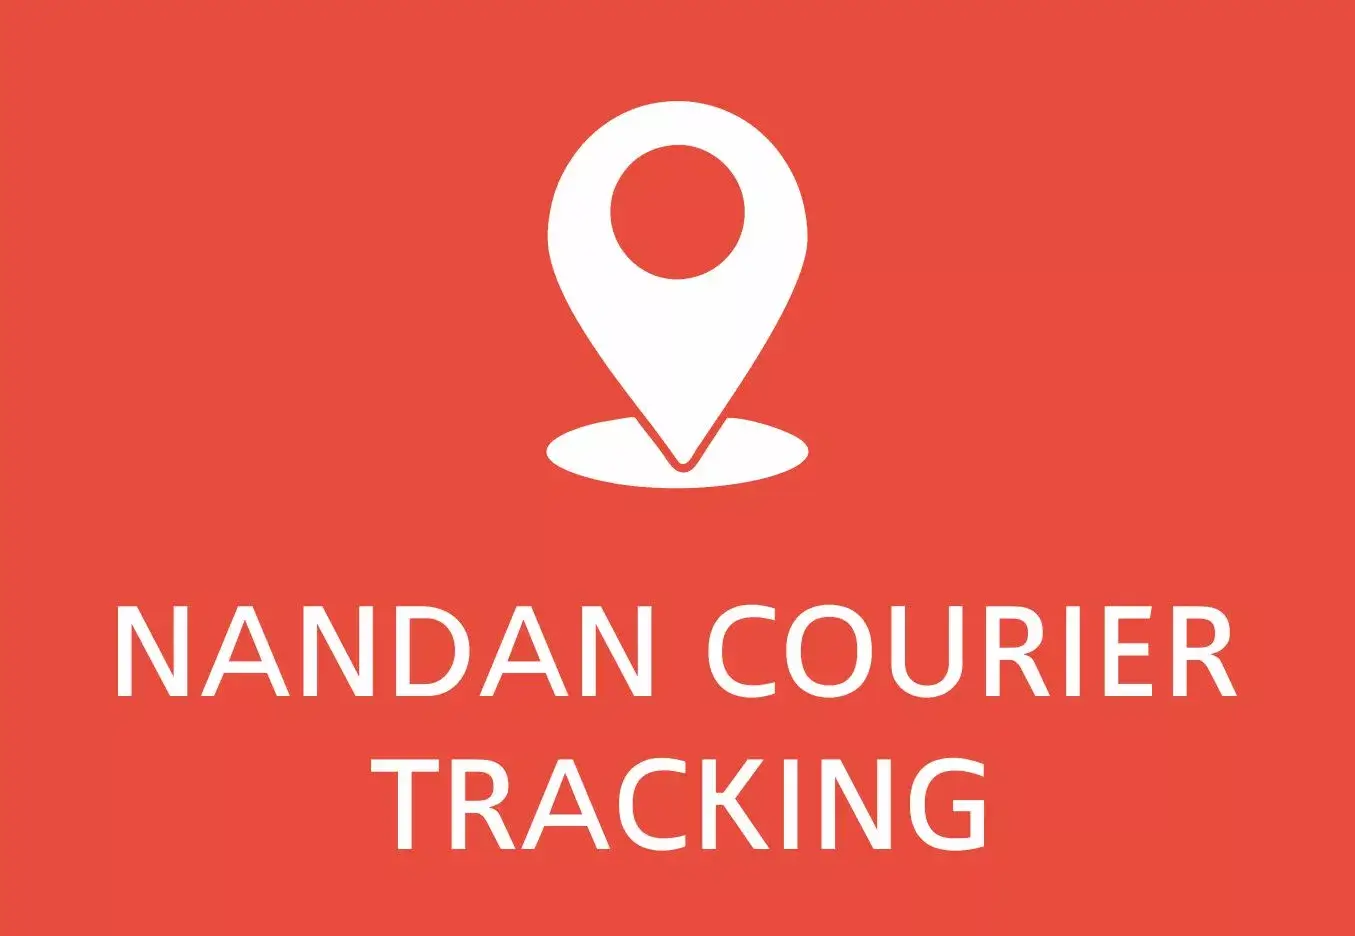 Nandan Courier Tracking